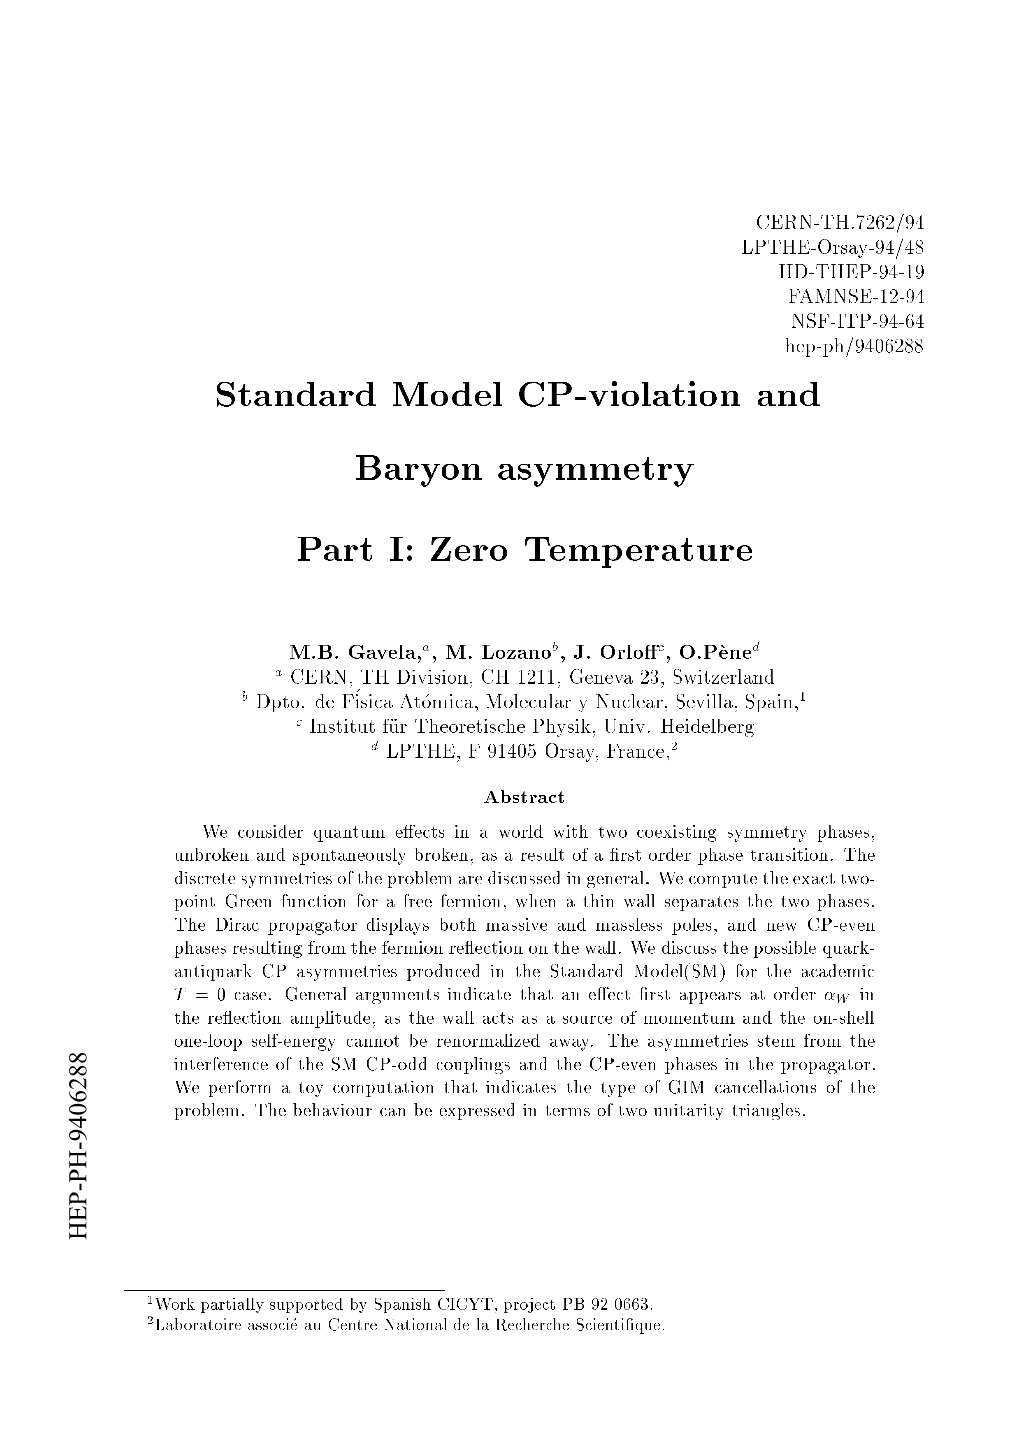 Standard Model CP-Violation and Baryon Asymmetry Part I: Zero